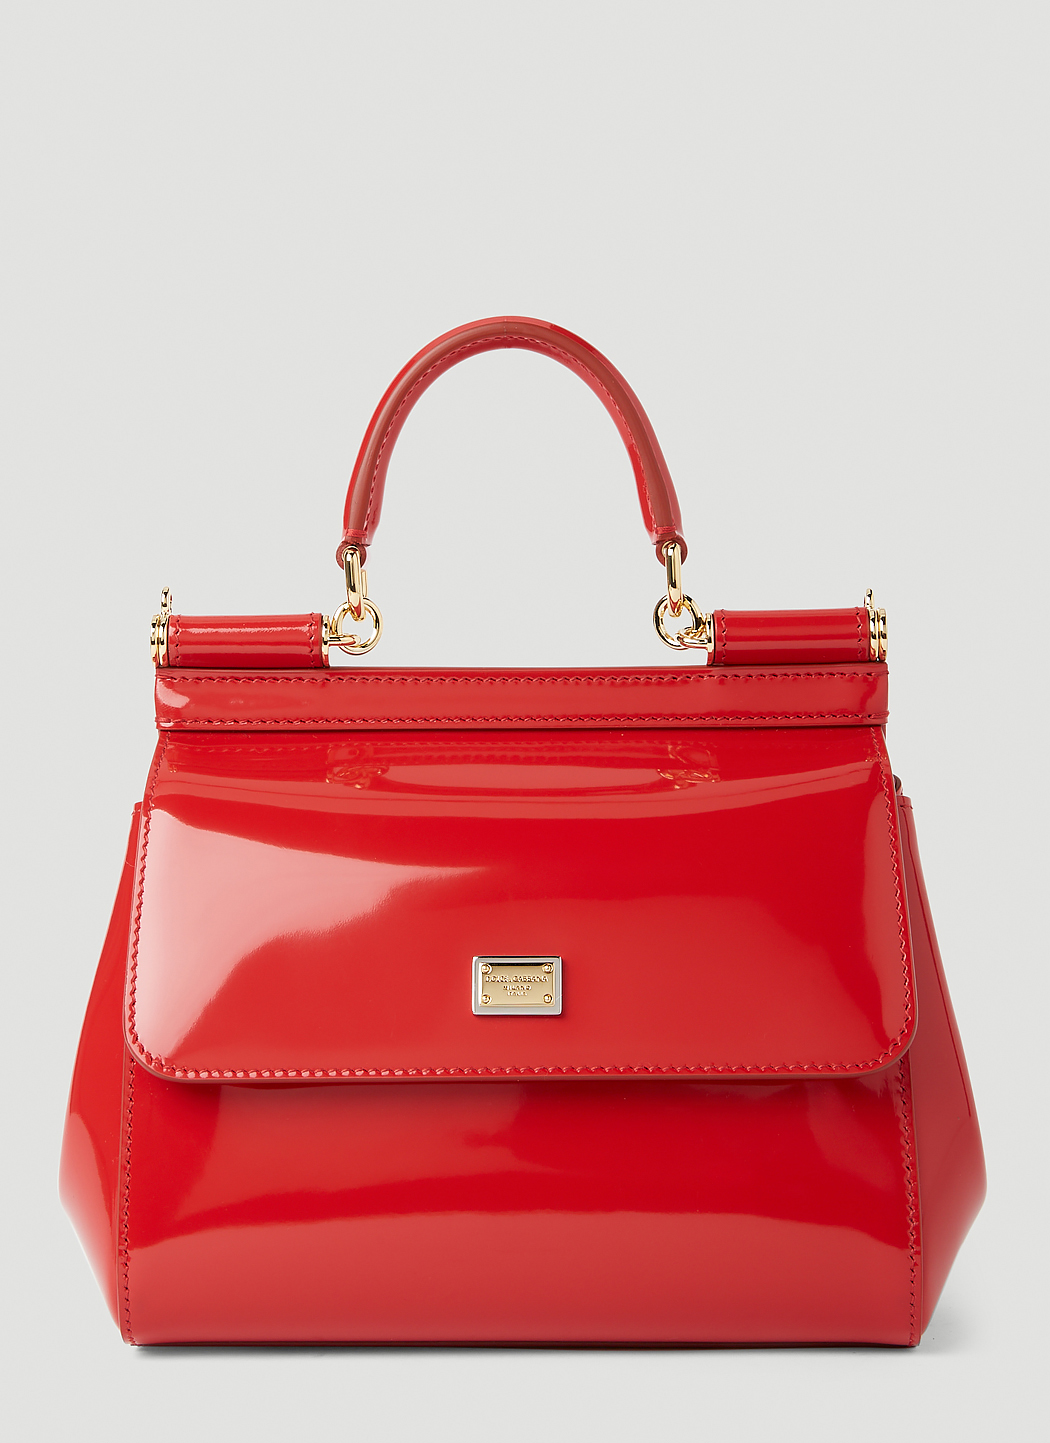 Dolce & Gabbana Small Sicily Handbag in Red